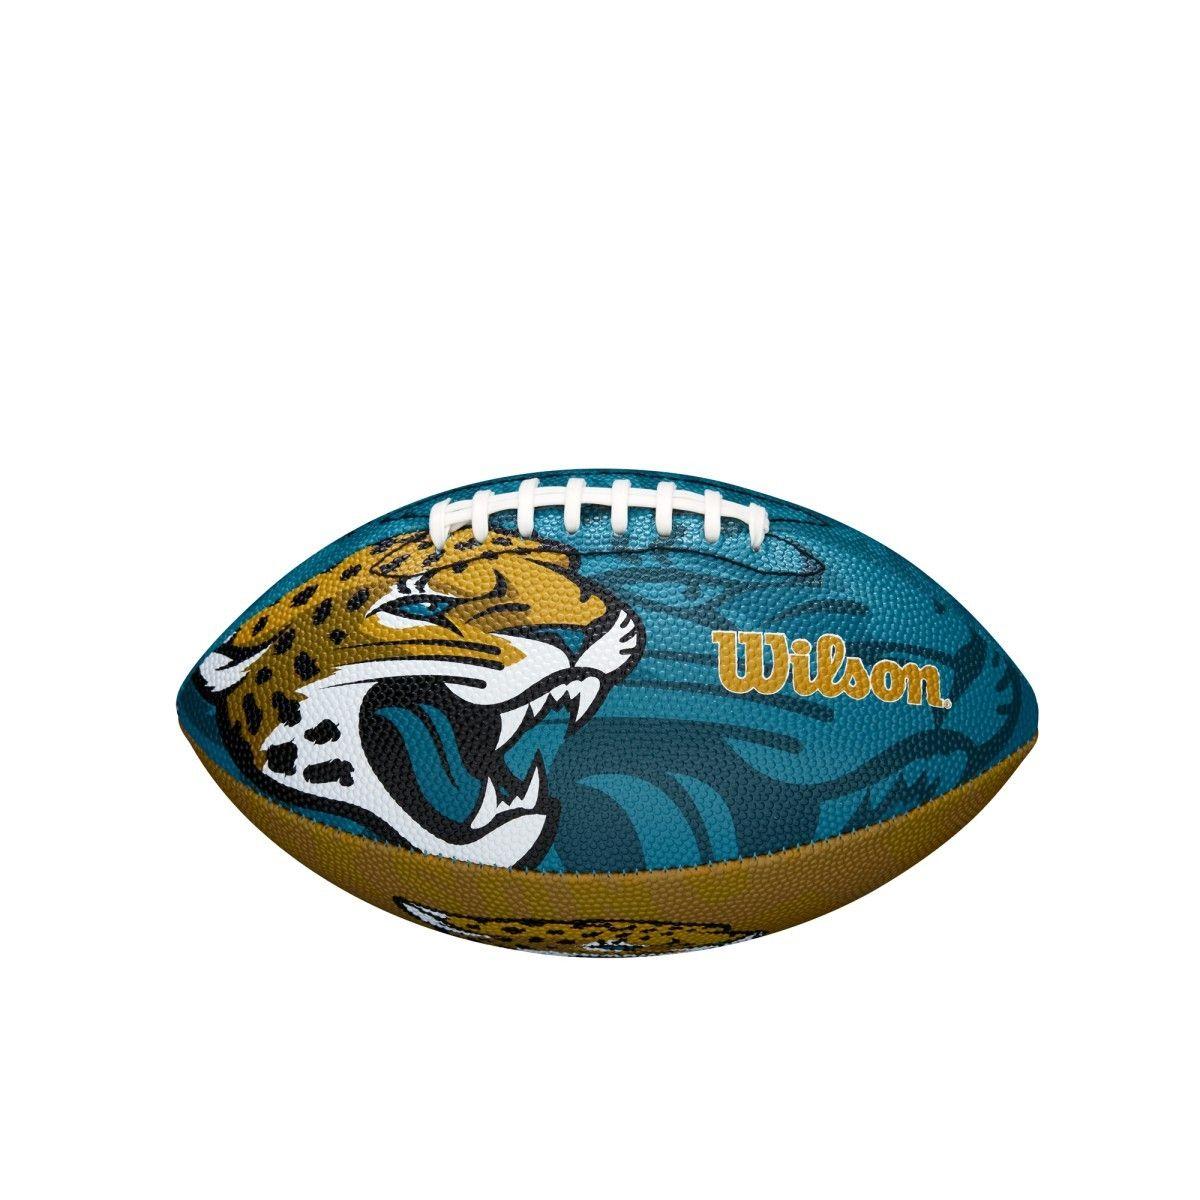 Jaguar Football Logo - NFL TEAM LOGO JUNIOR SIZE FOOTBALL JAGUARS. Wilson